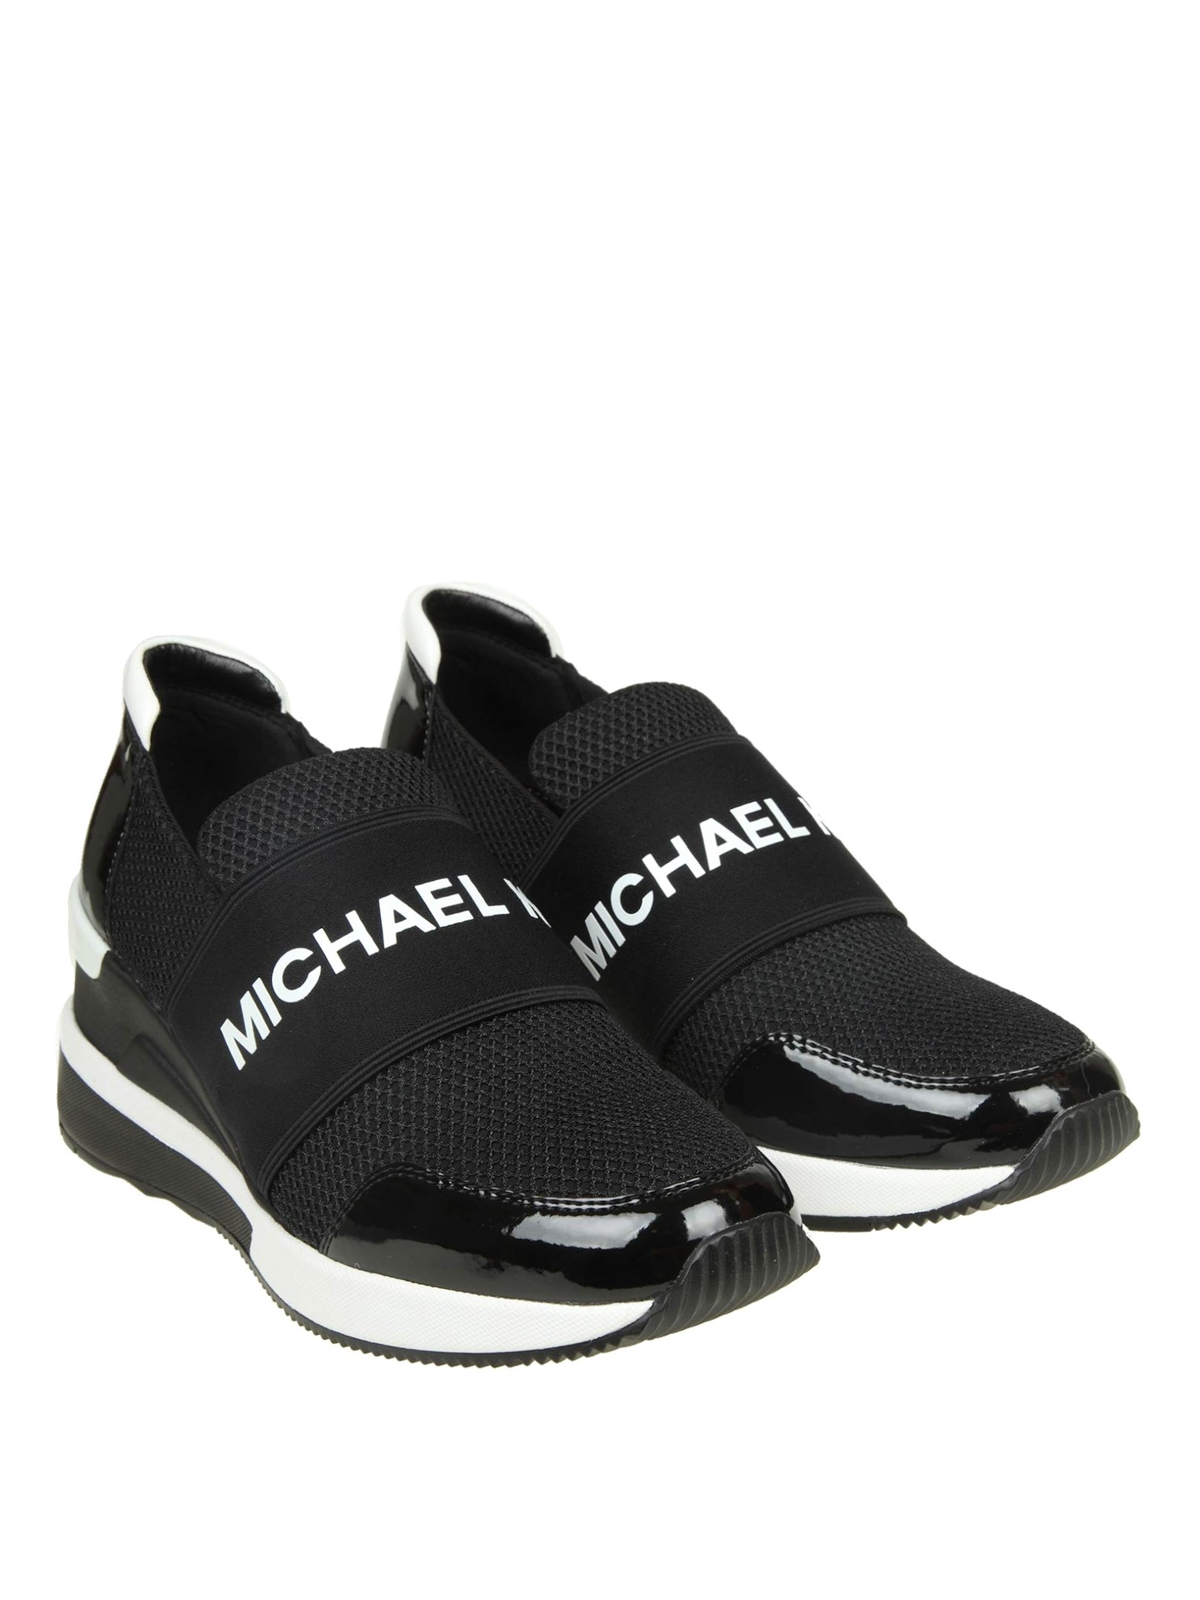 michael michael kors felix scuba and mesh sneaker